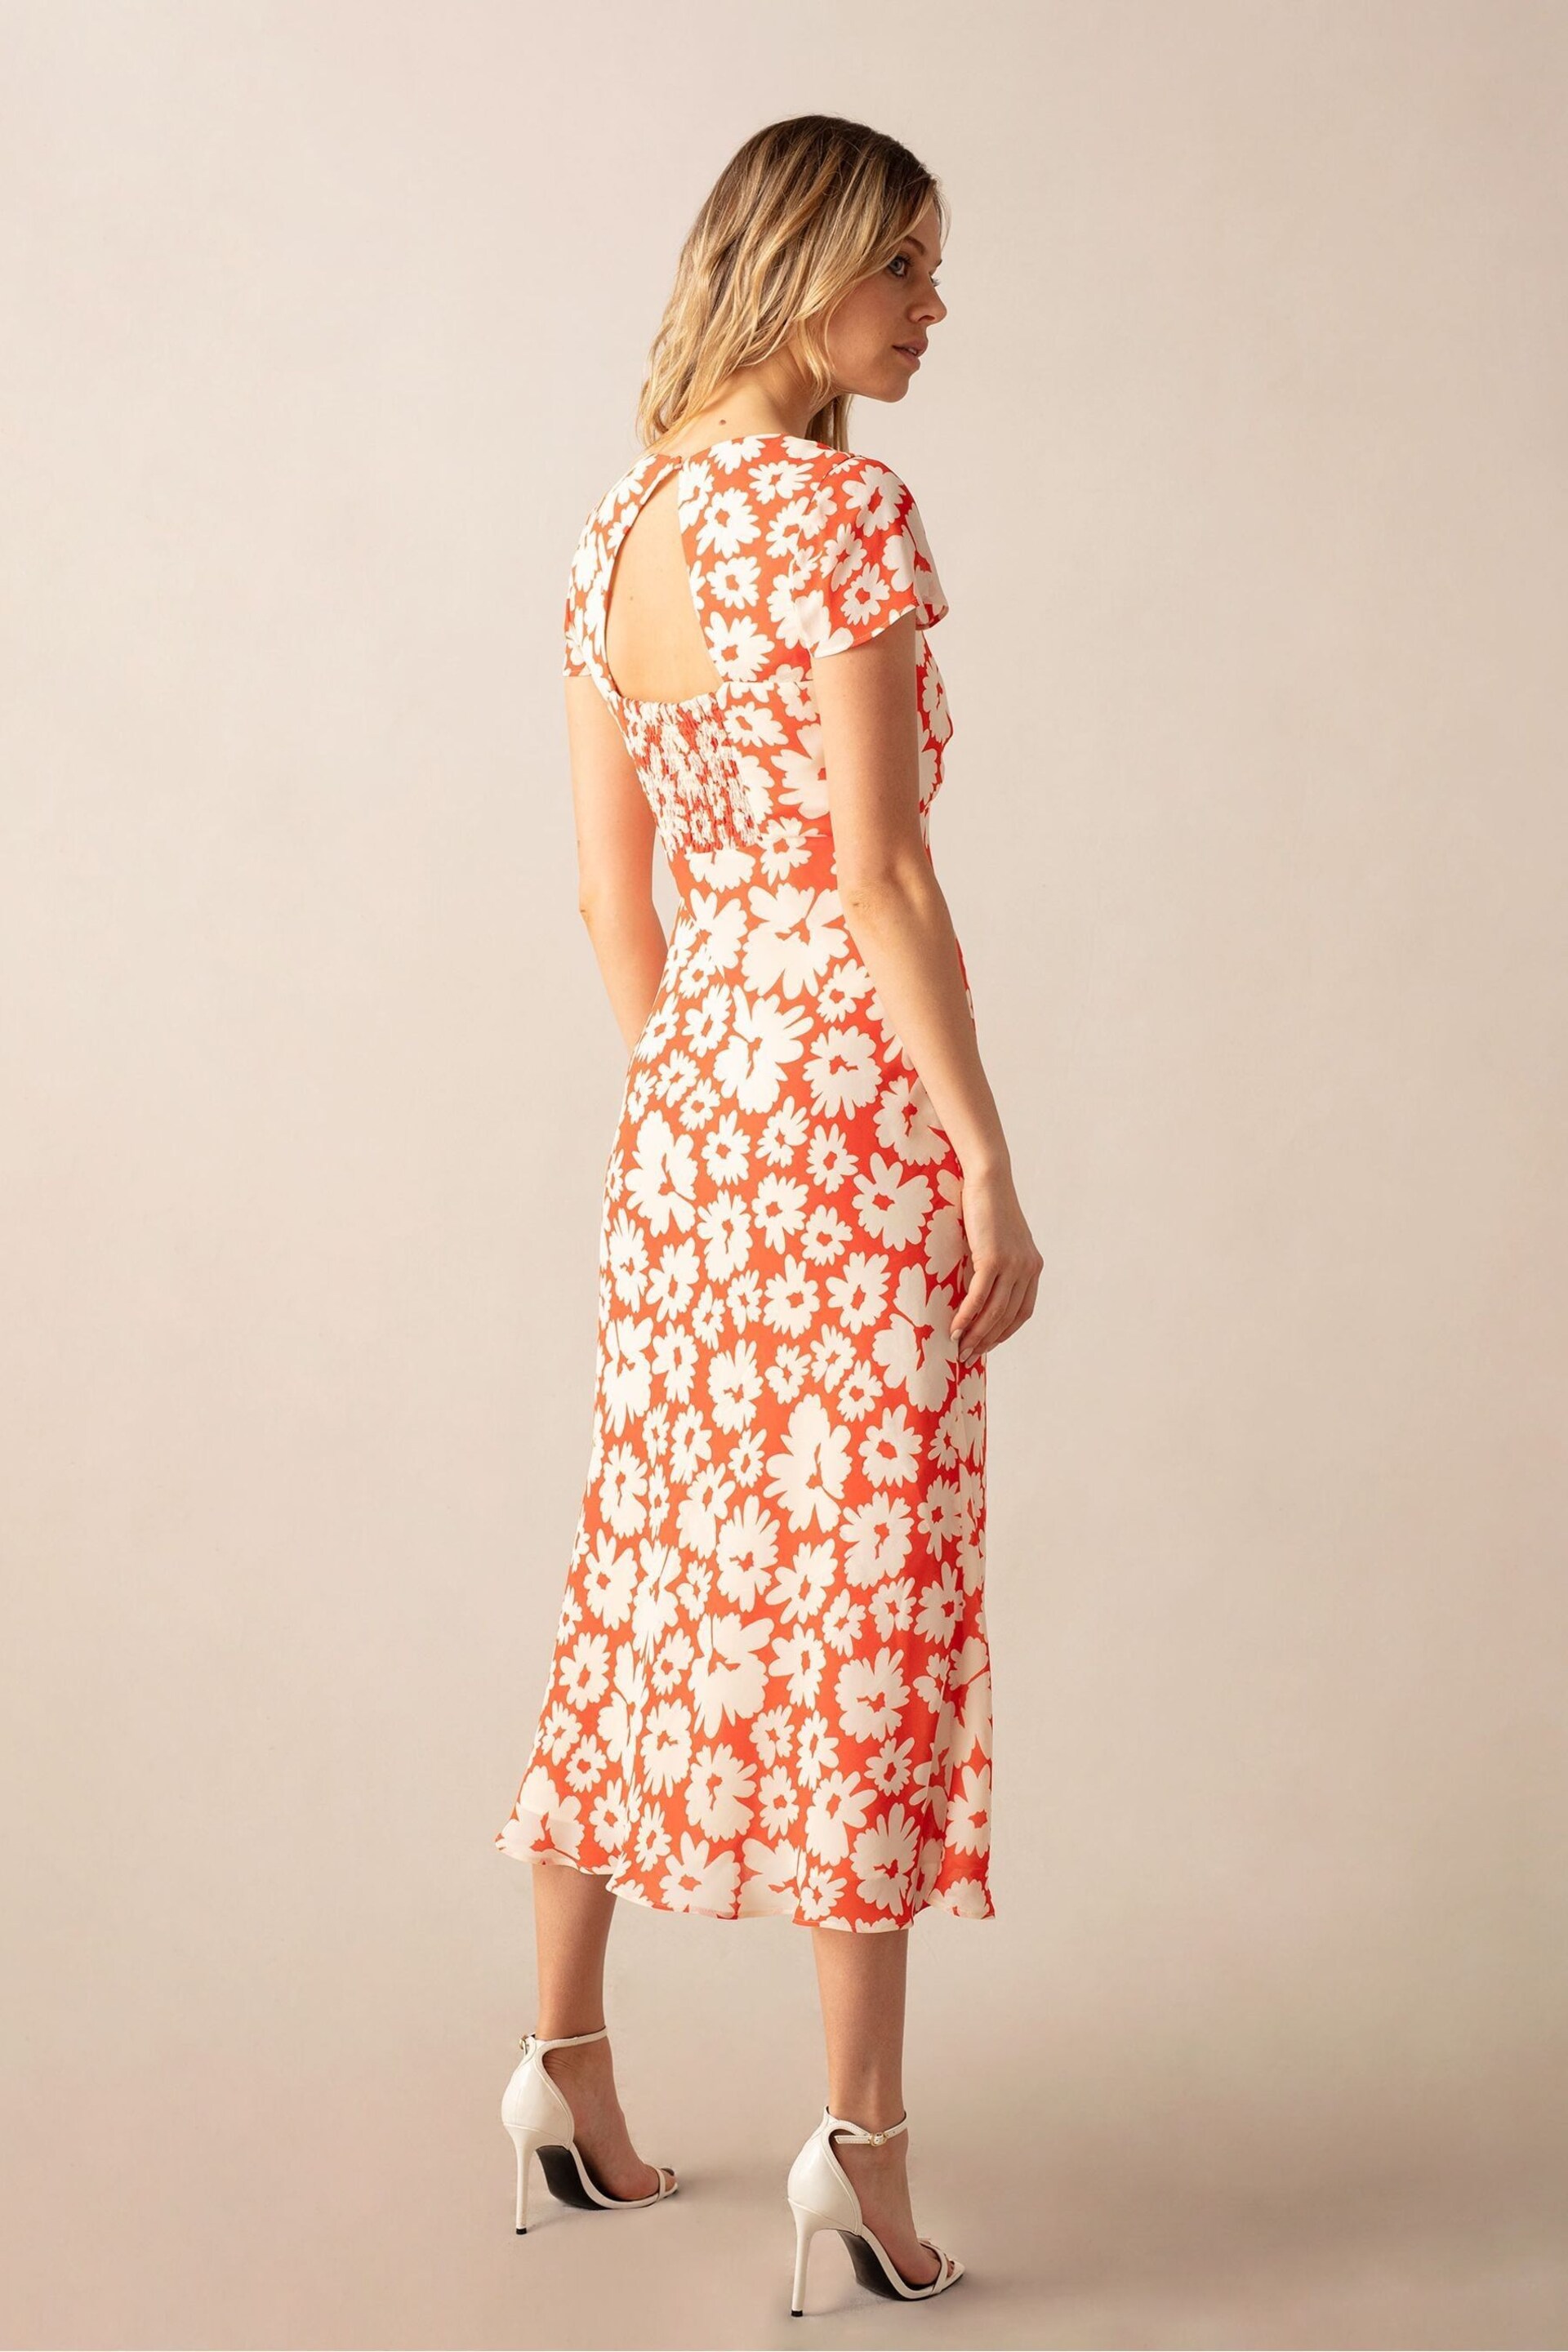 Ro&Zo Petite Orange Spot Print Sweetheart Neckline Midi Dress - Image 4 of 4